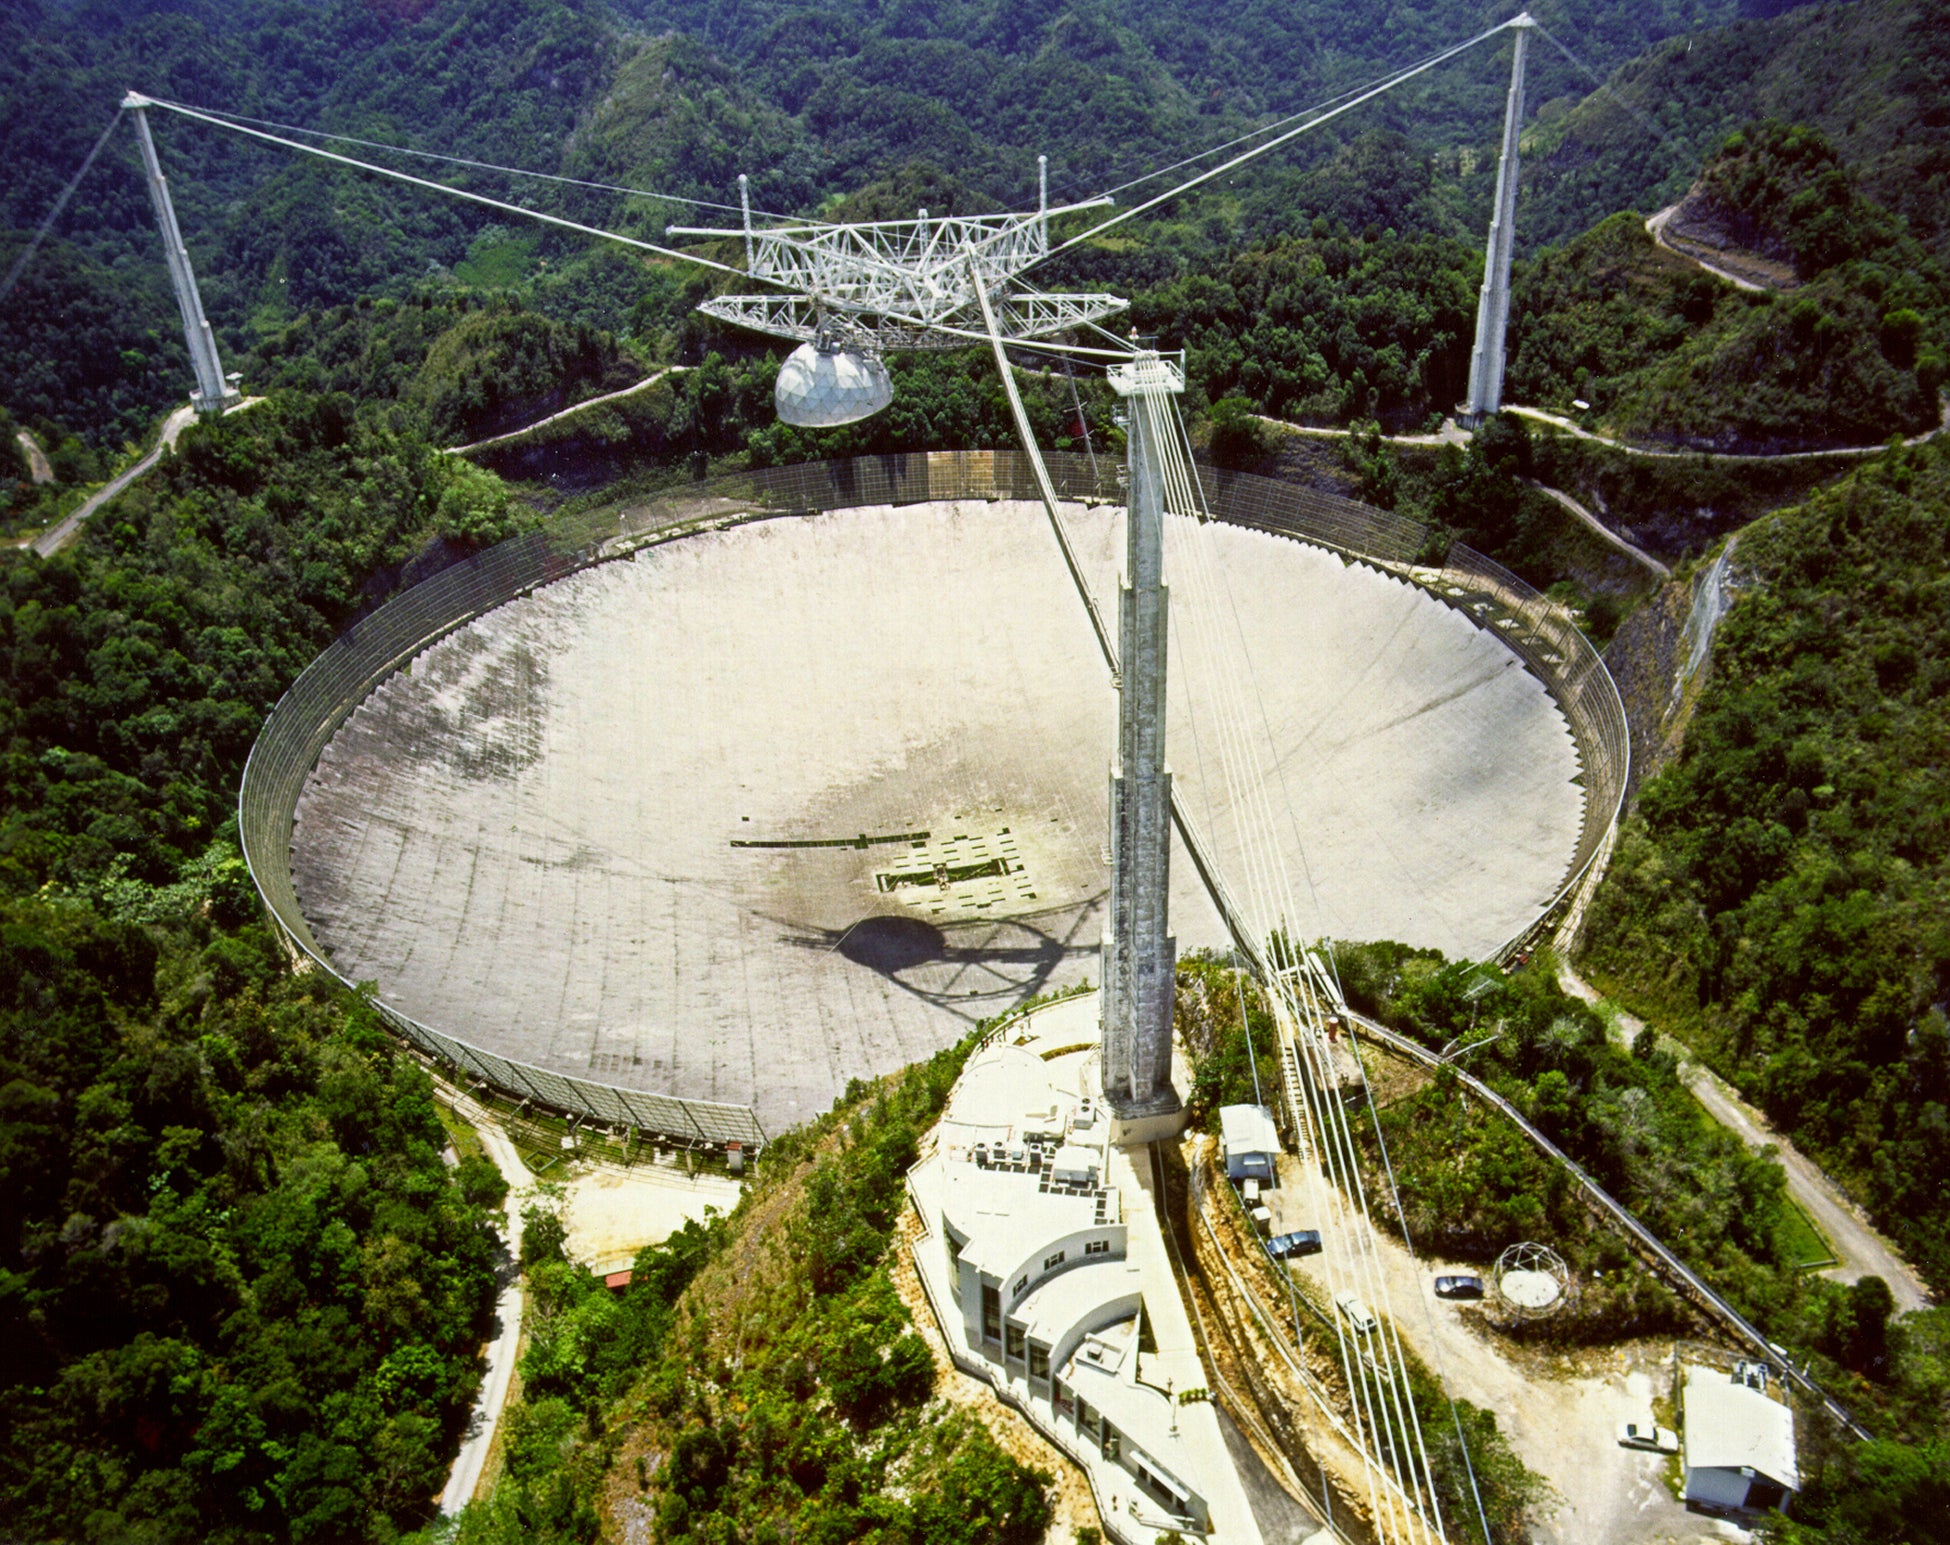 Largest Radio Telescope In The World on Sale, 52% OFF | atheneainstitute.com